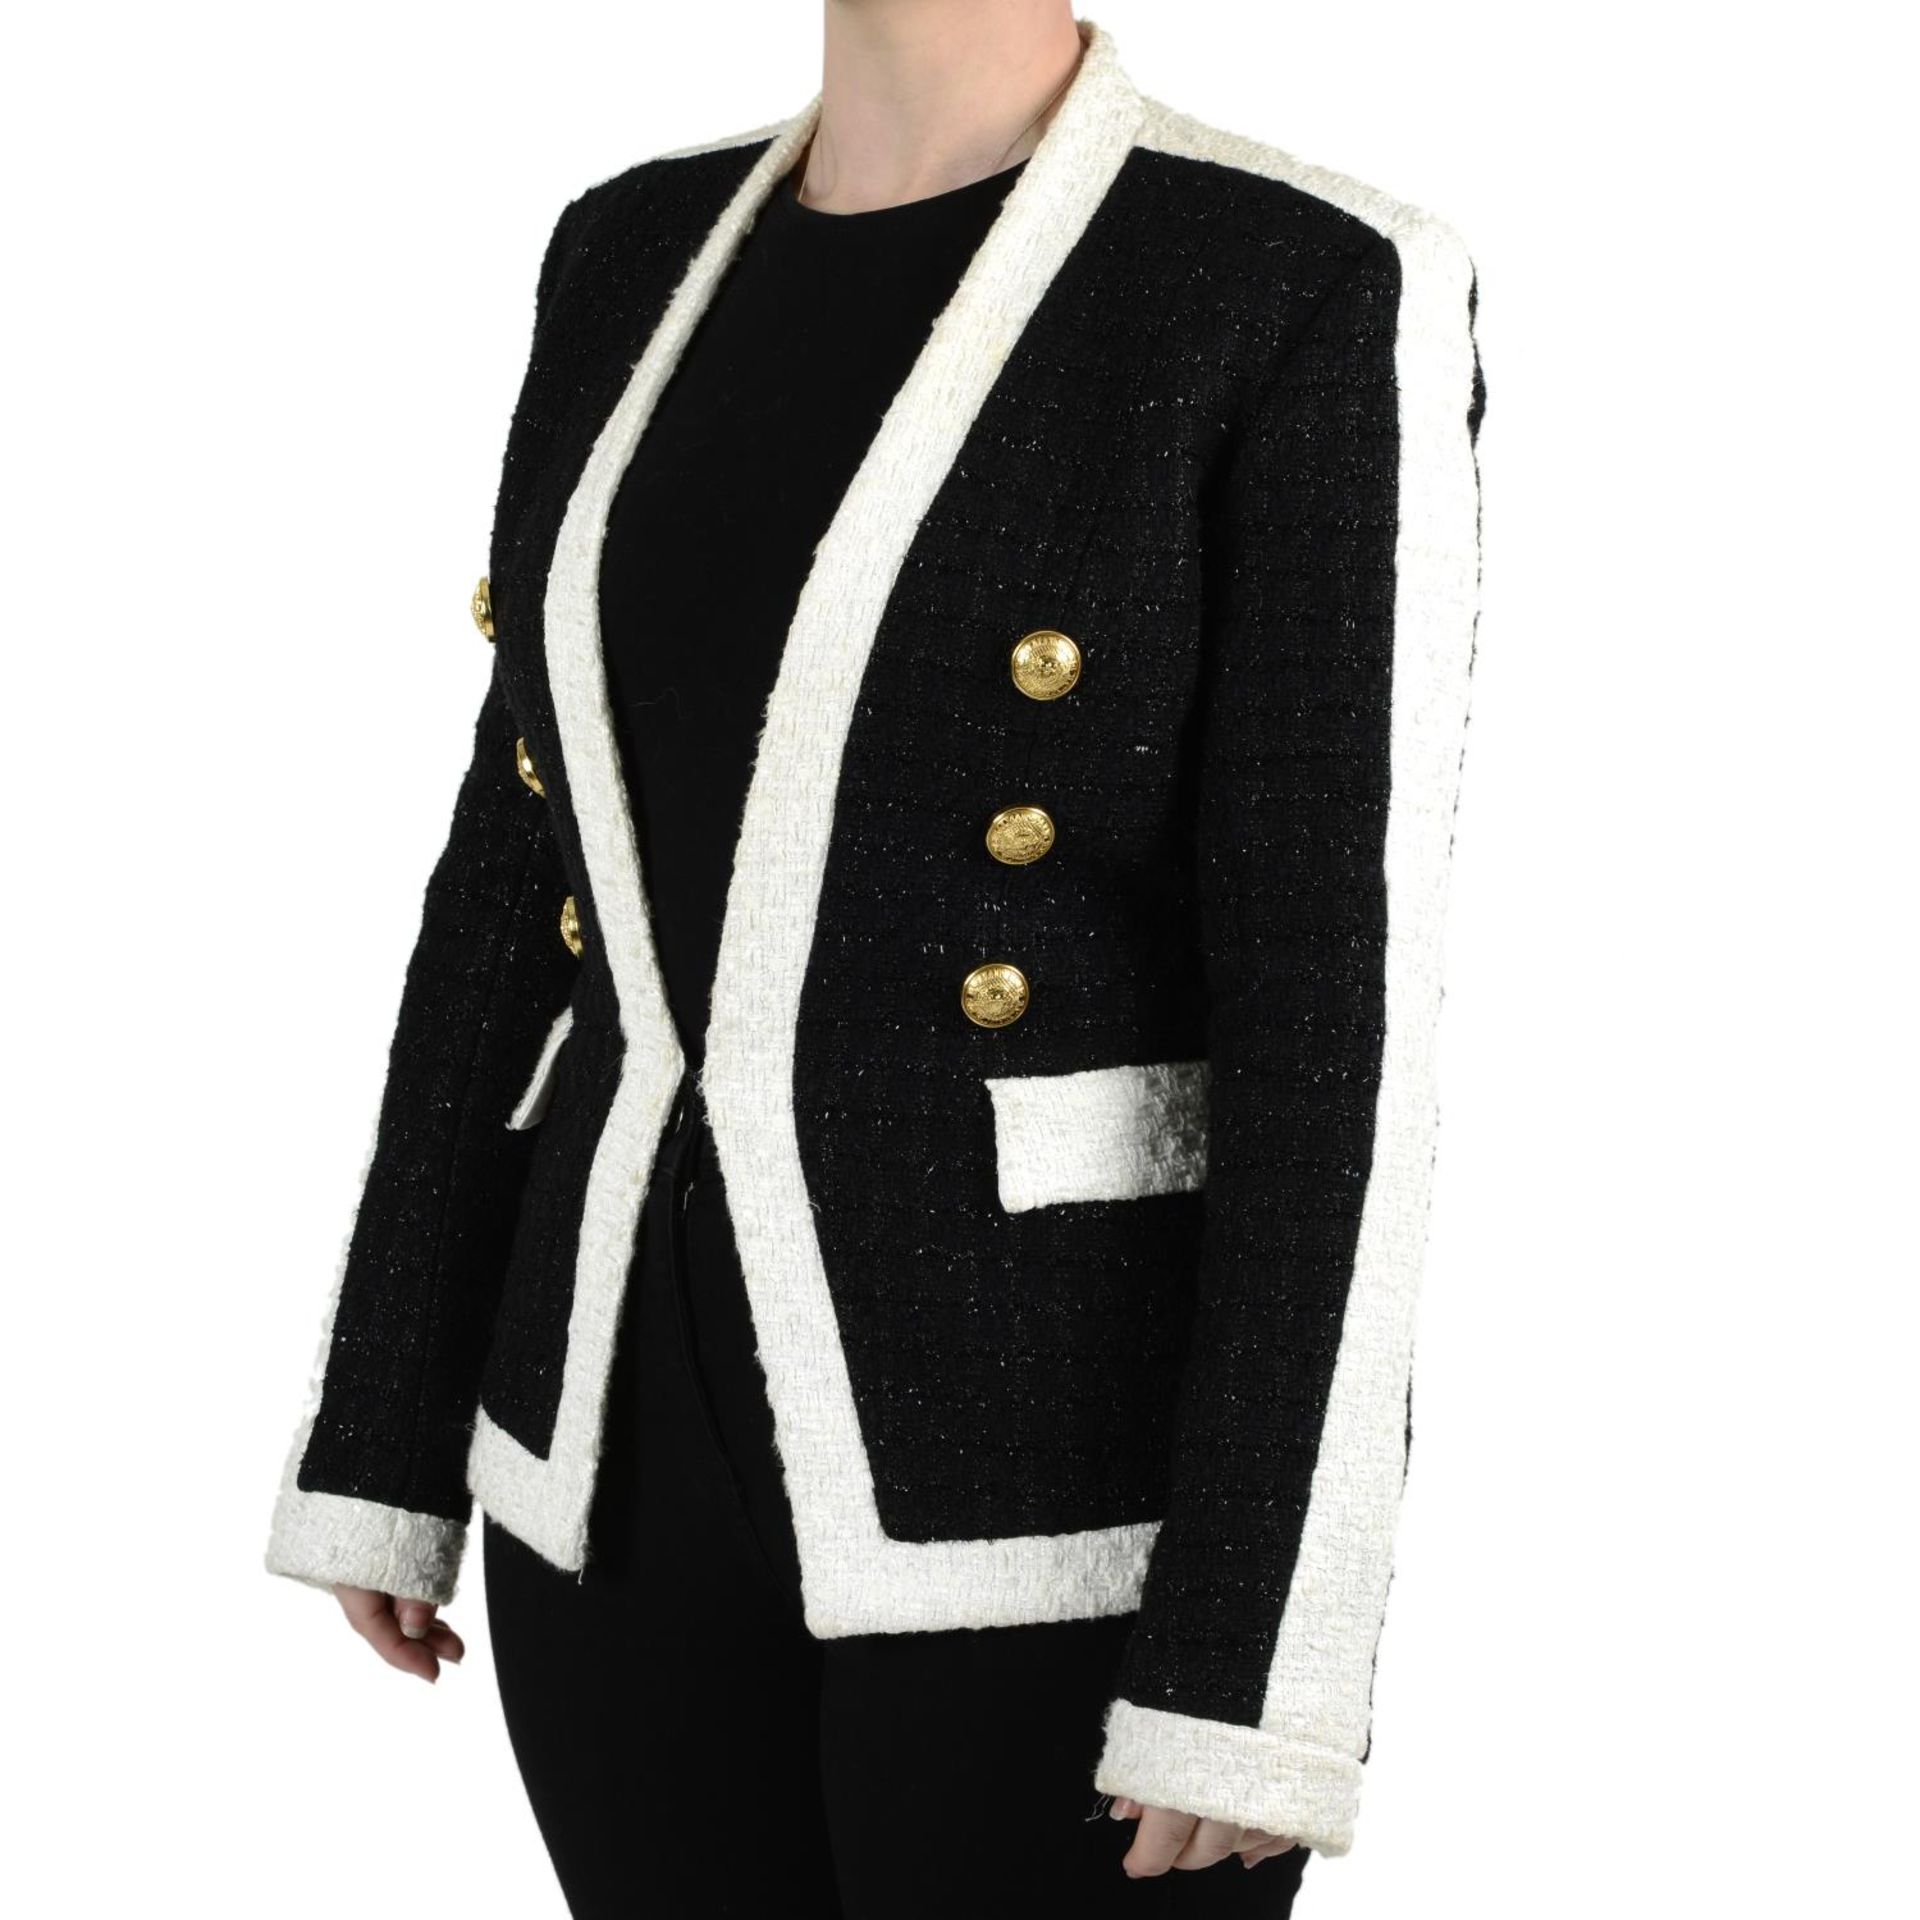 BALMAIN - a black and white tweed blazer. - Image 3 of 4